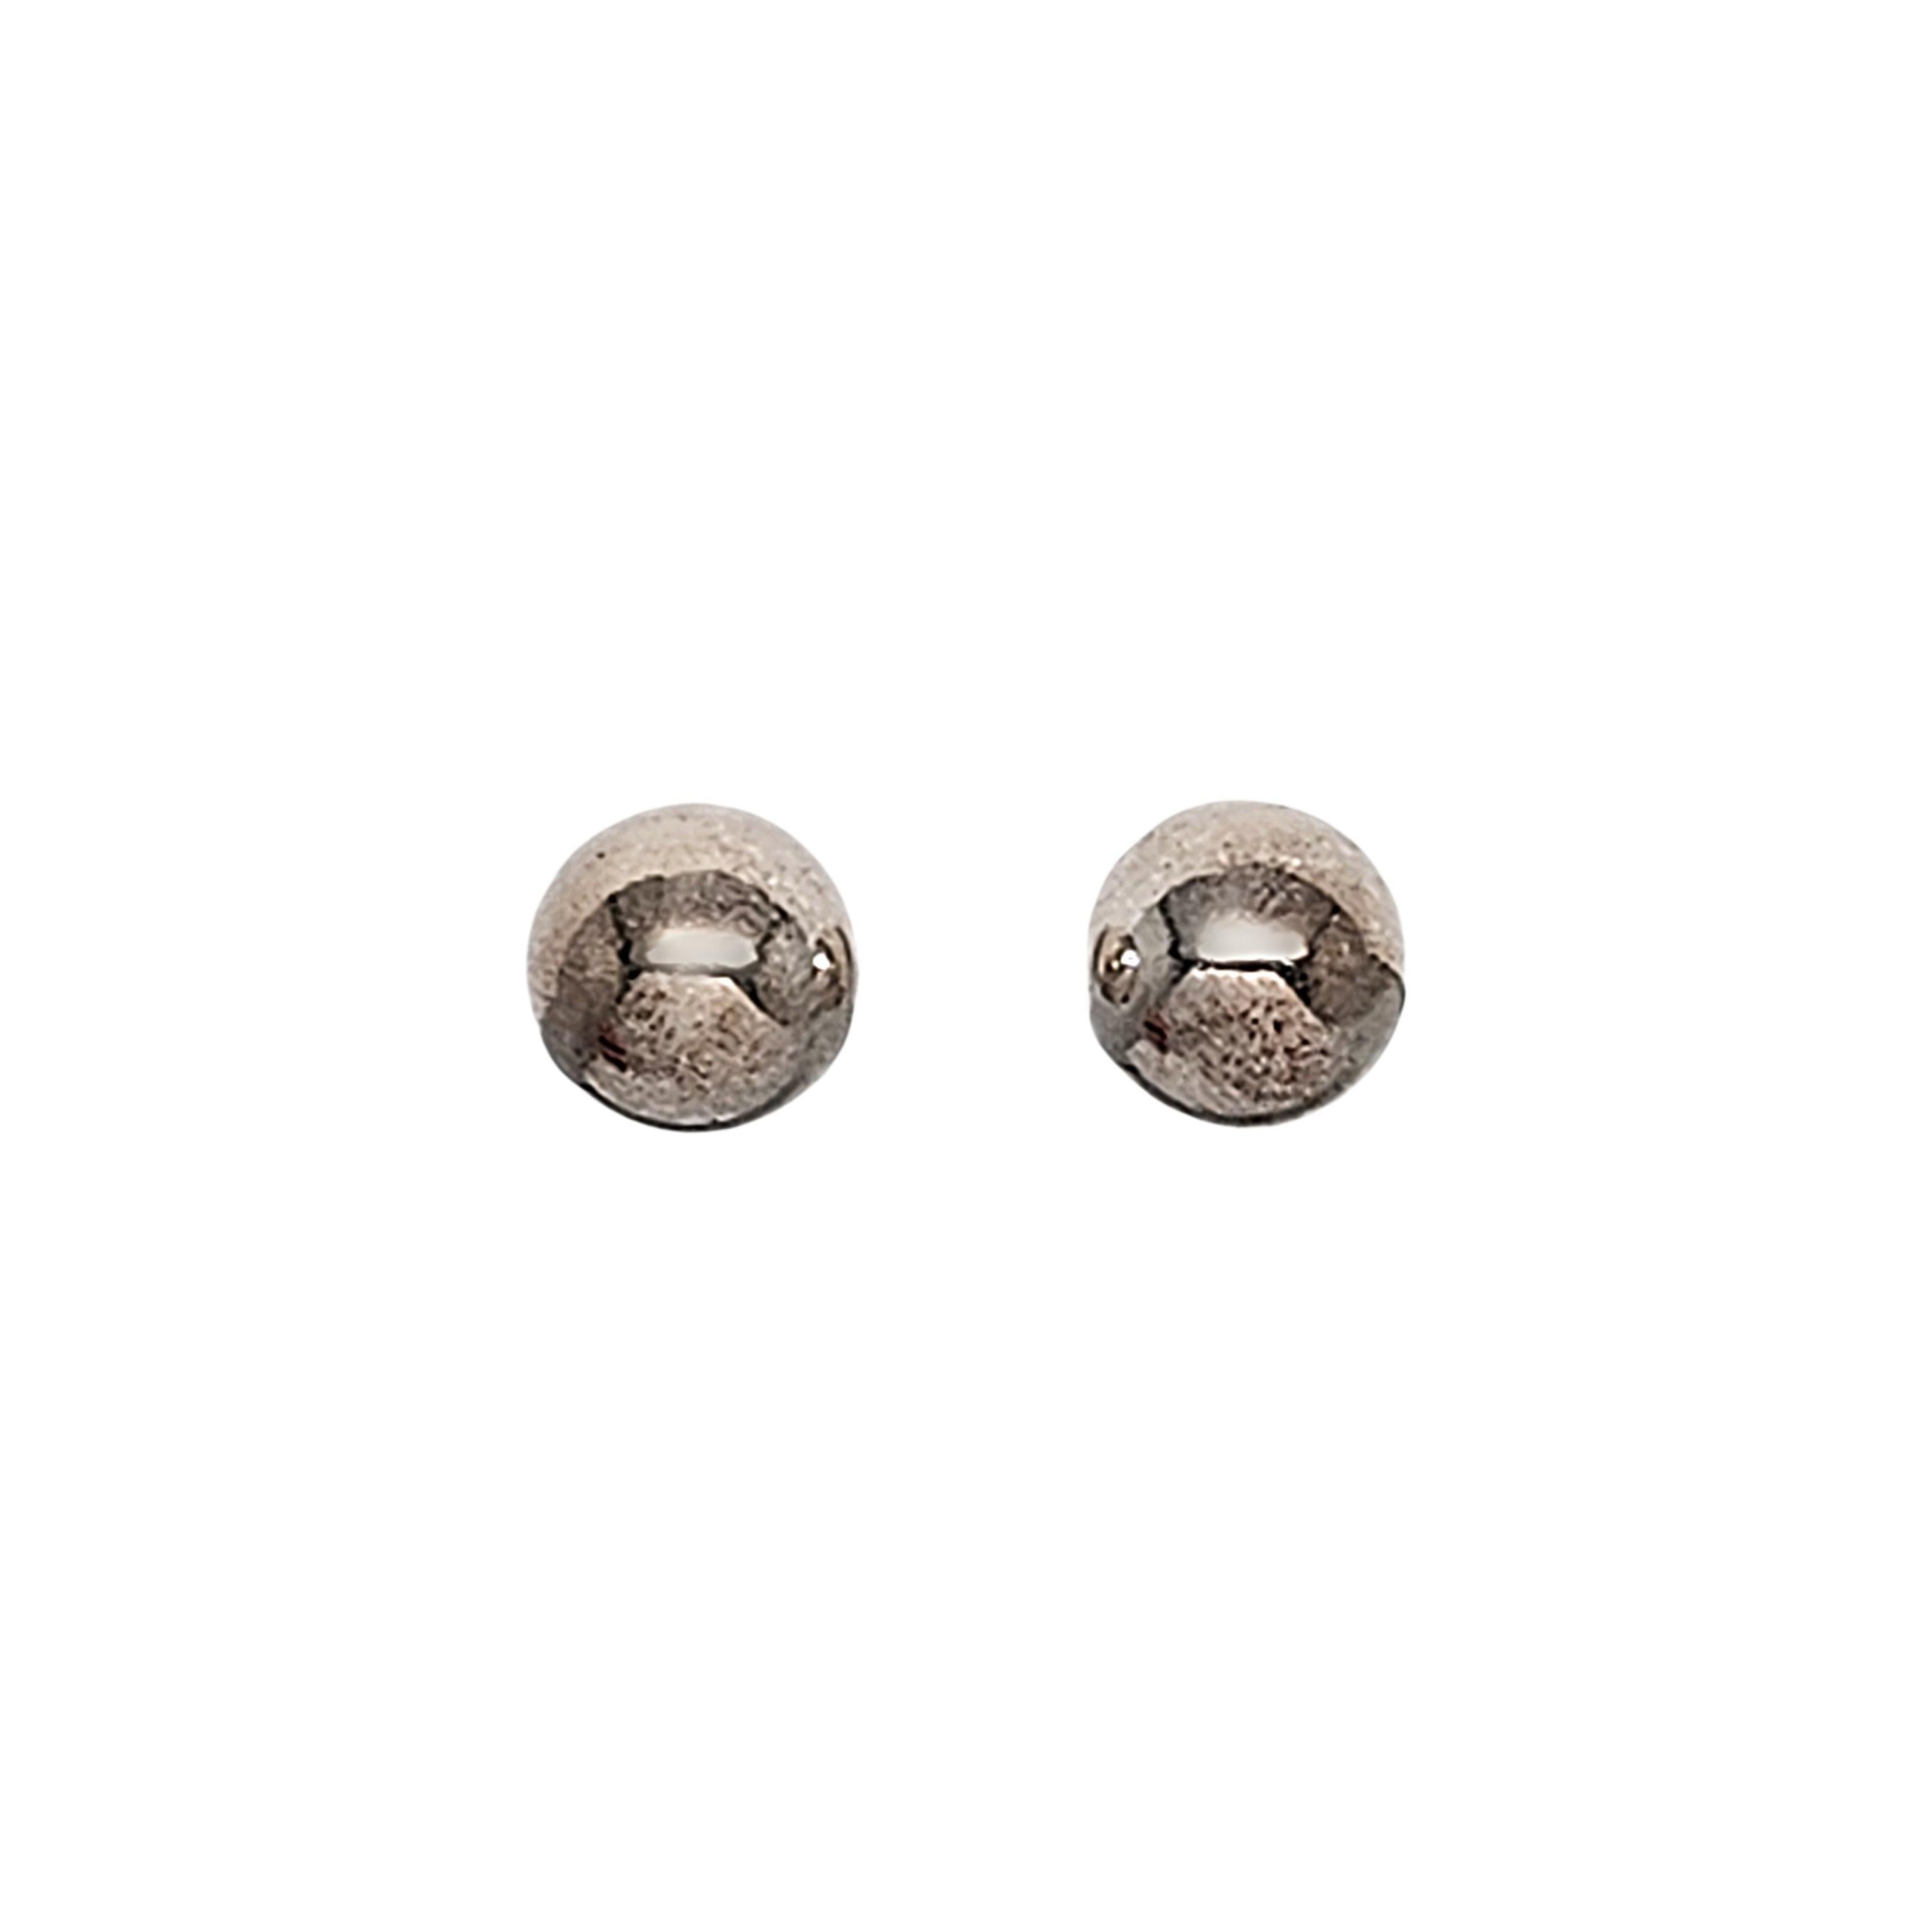 Tiffany & Co Sterling Silver Ball Stud Earrings #16406 For Sale 1